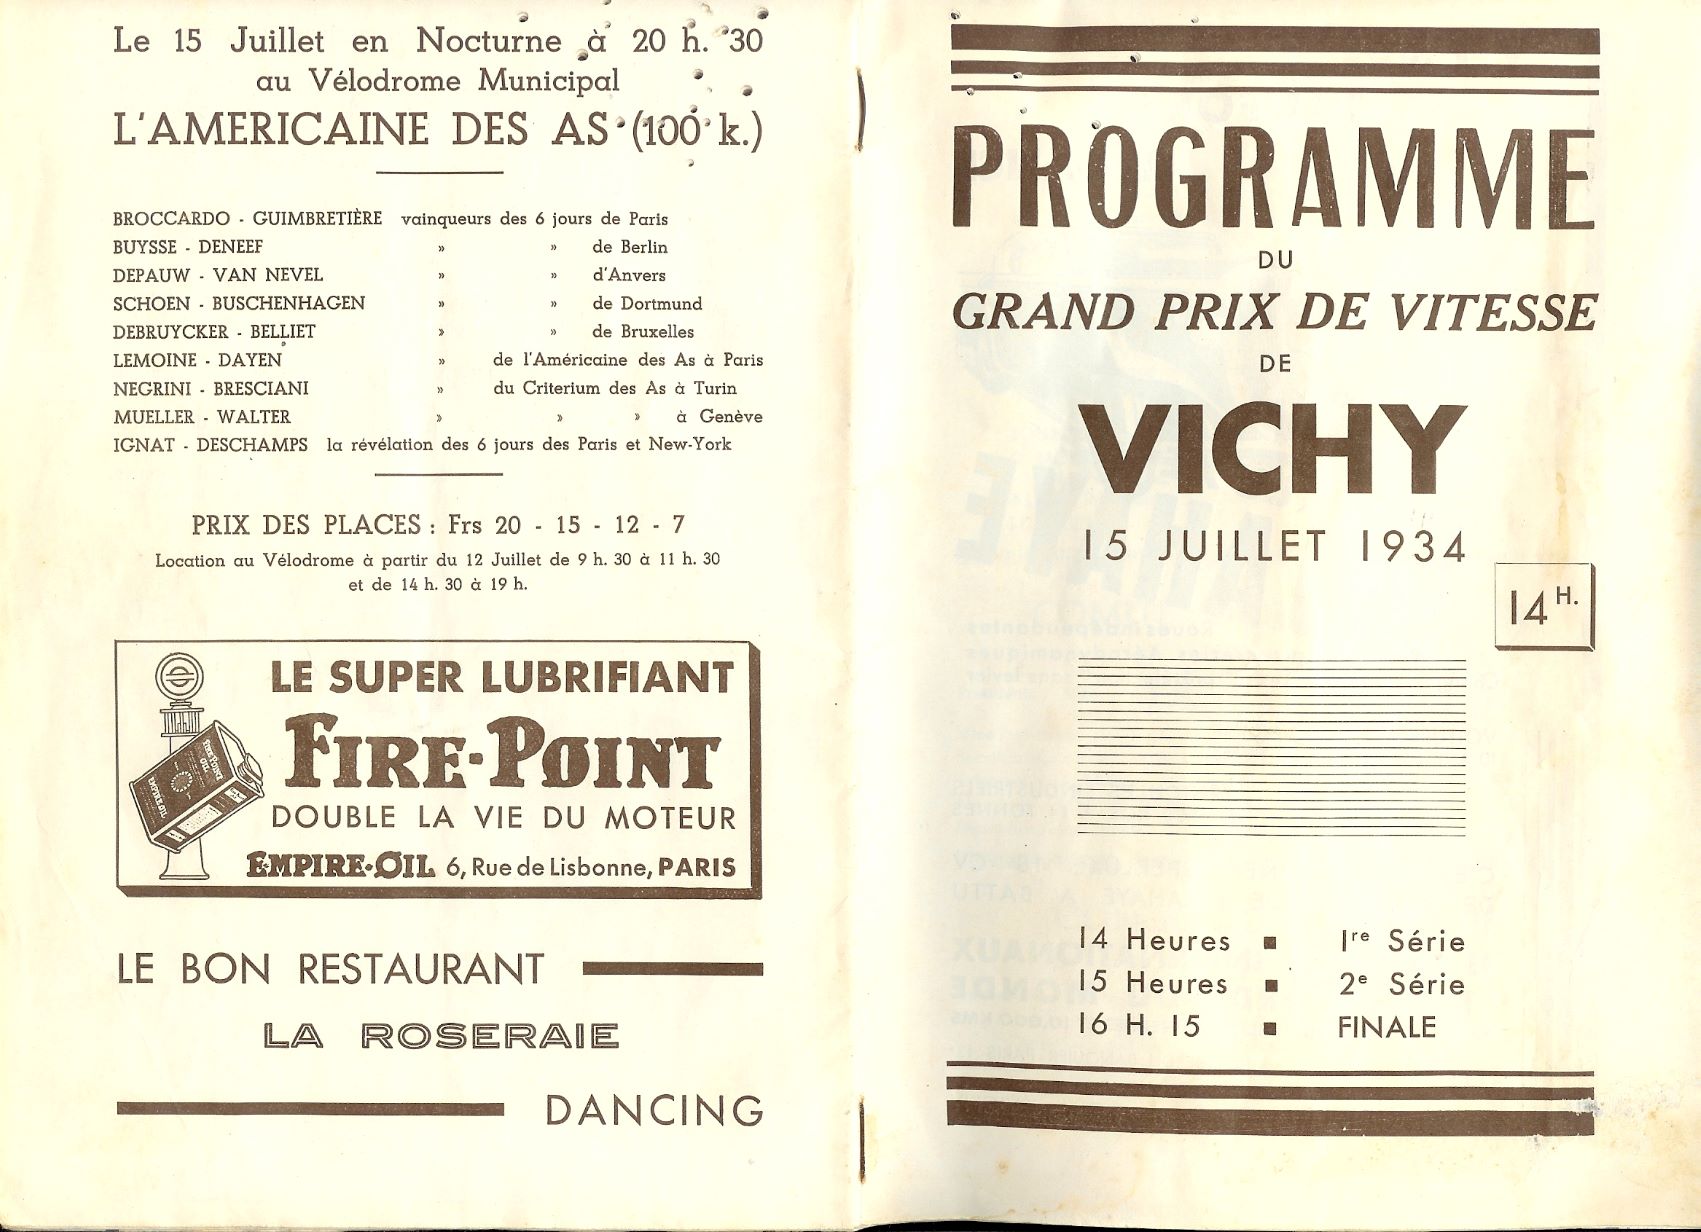 VICHY CLASSIC 1934